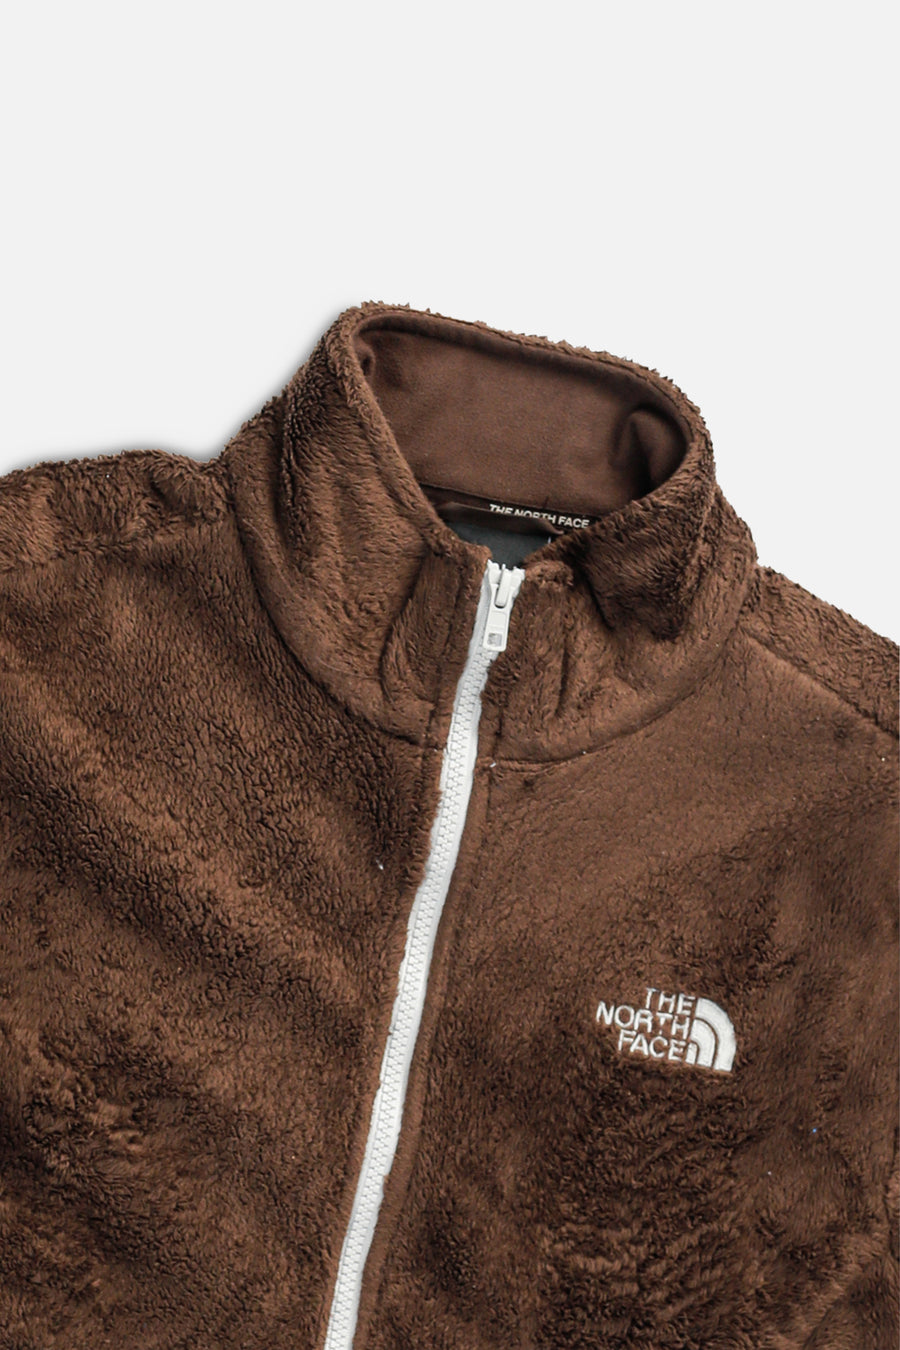 Rework North Face Crop Fleece Jacket - L